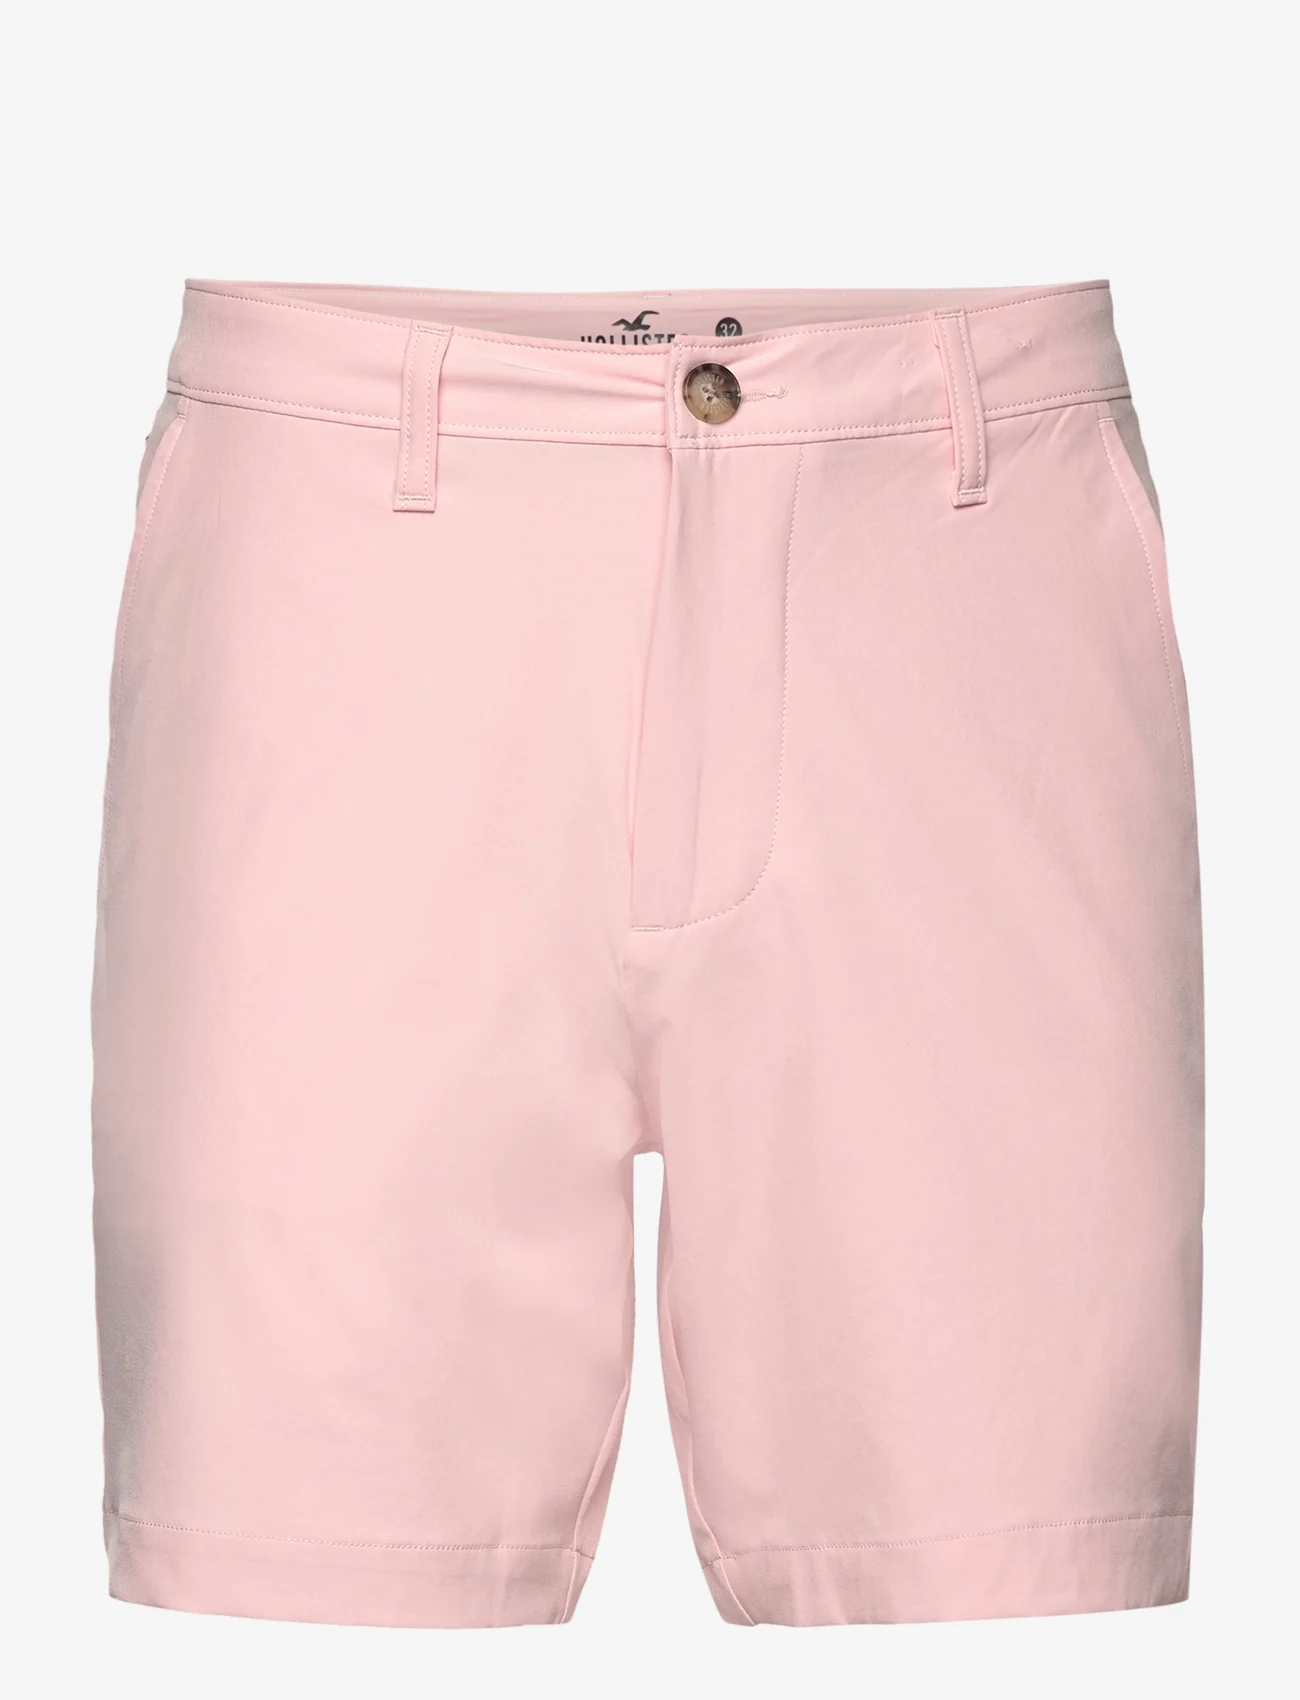 Hollister - HCo. GUYS SHORTS - chino lühikesed püksid - pink - 0